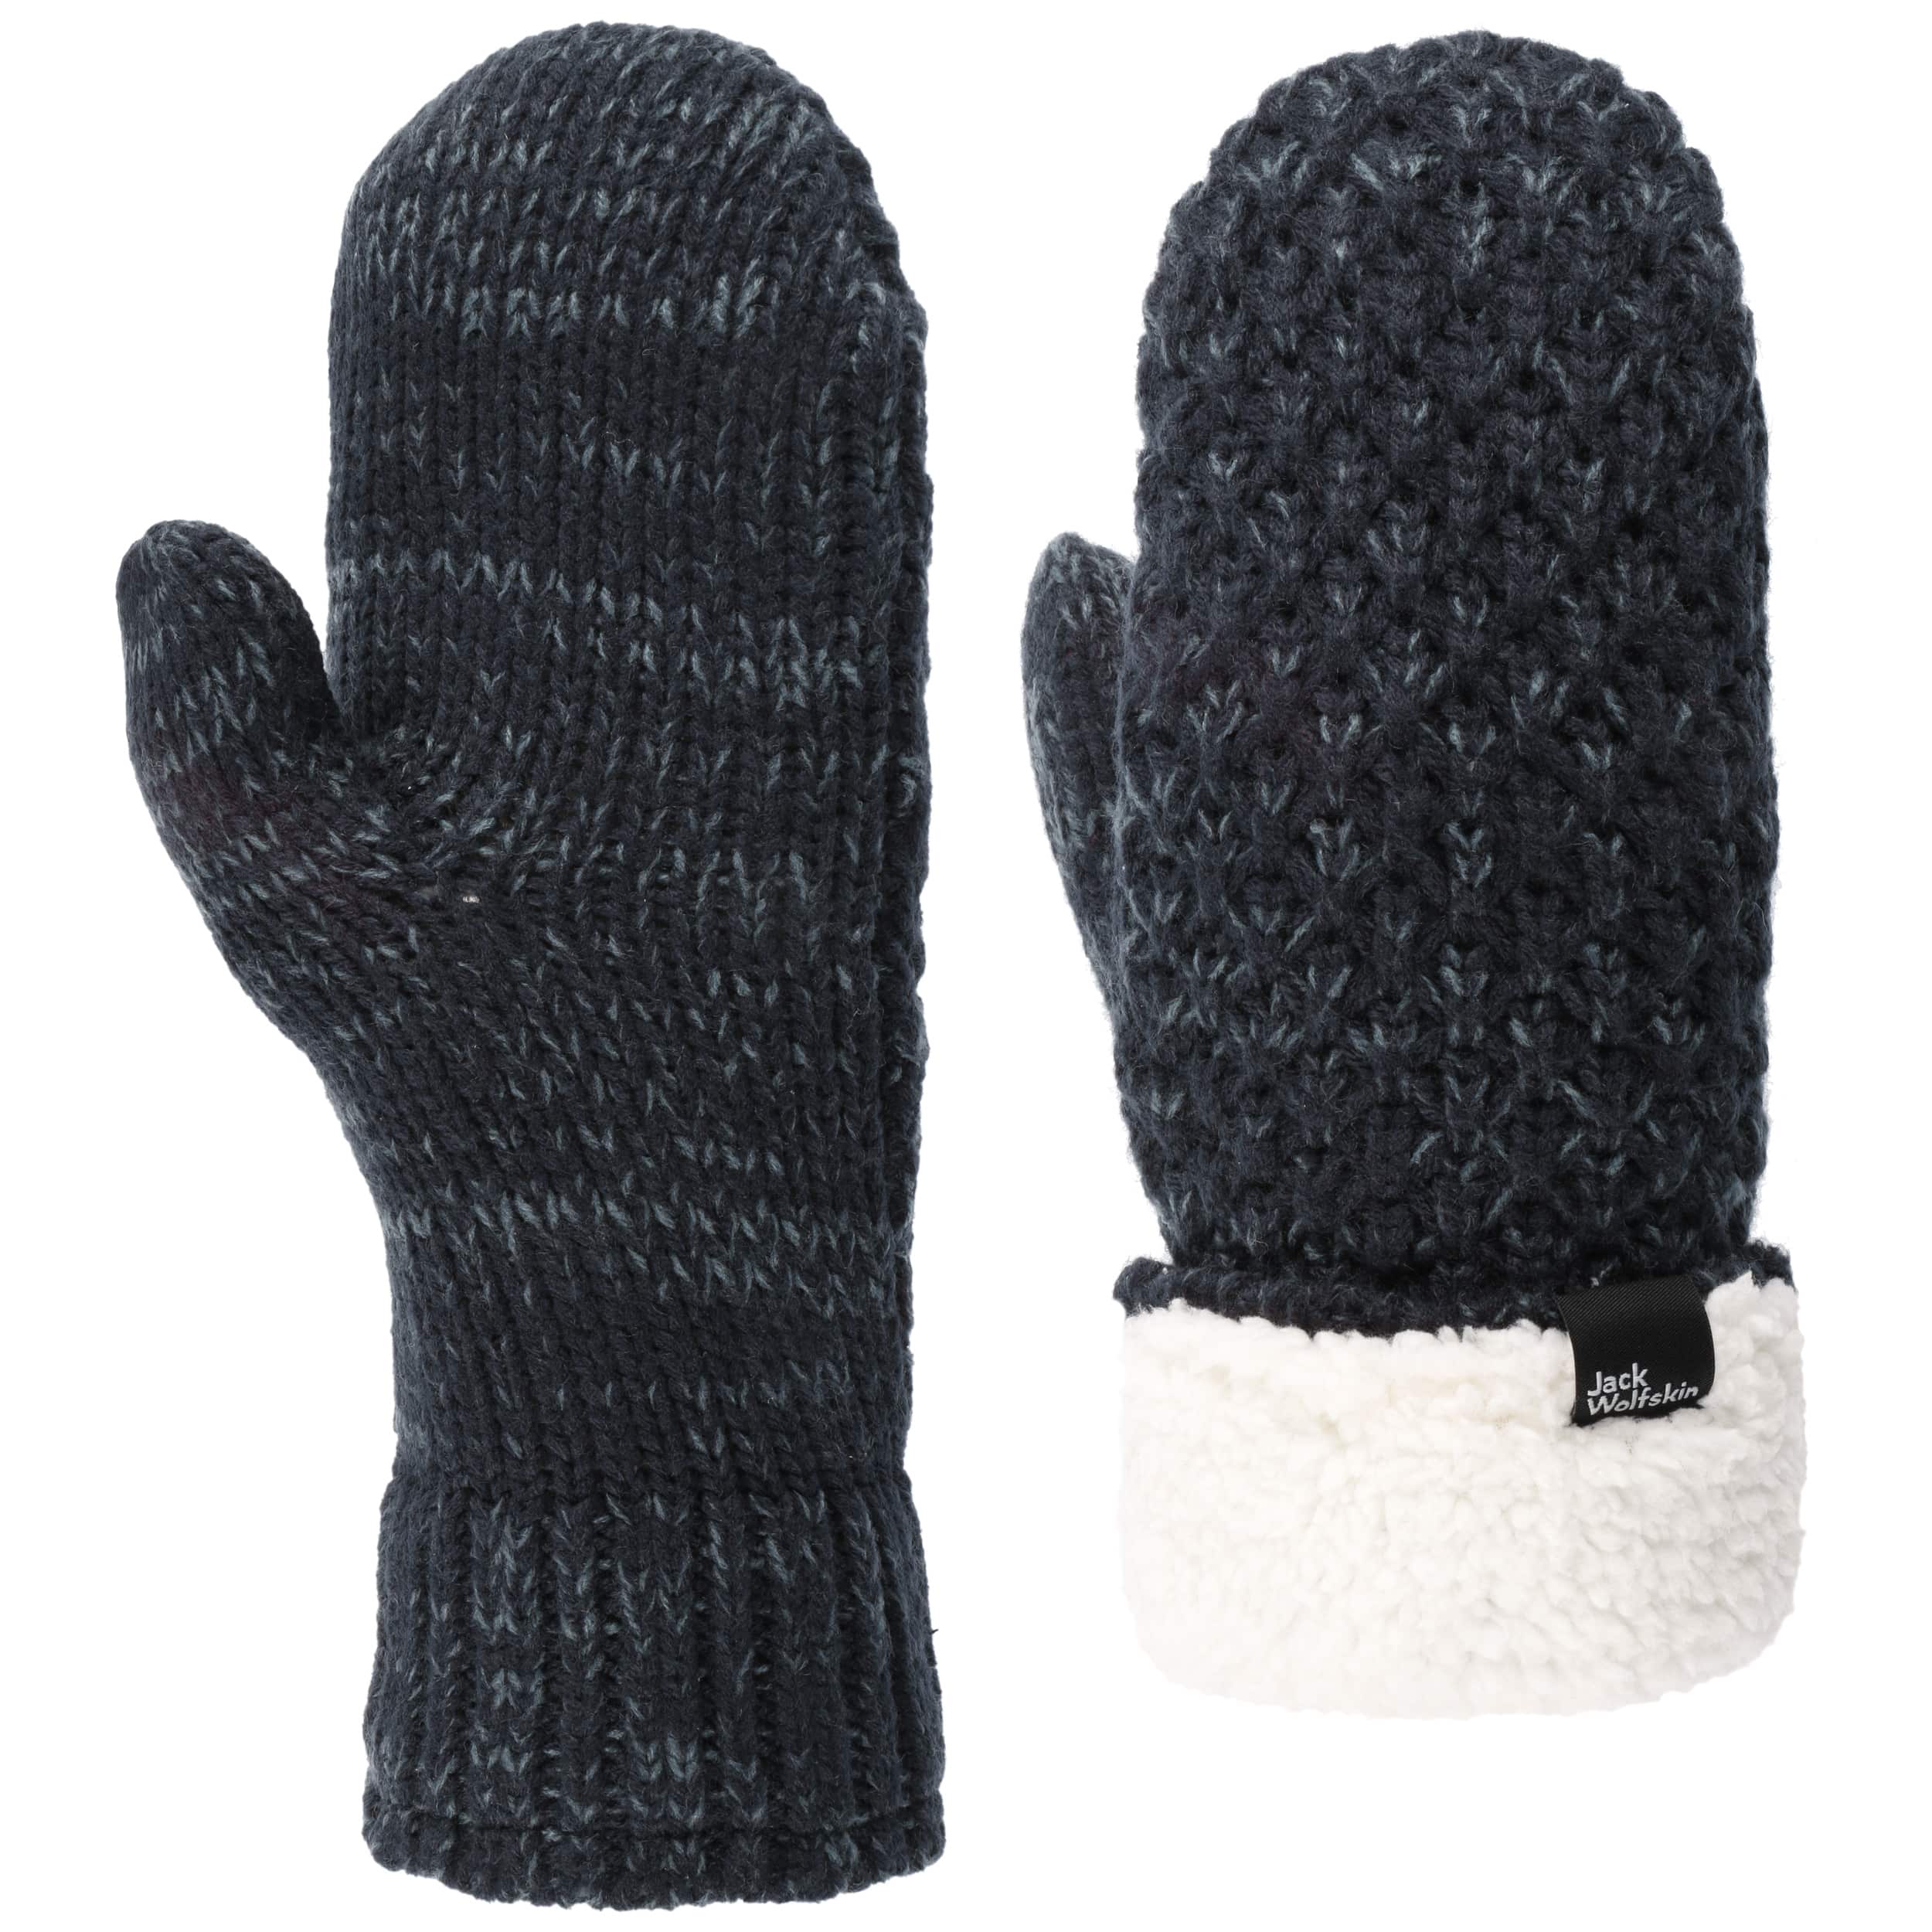 Jack Knit Caps & Highloft Mittens ▷ Wolfskin --> Hatshopping by Shop Hats, Beanies online